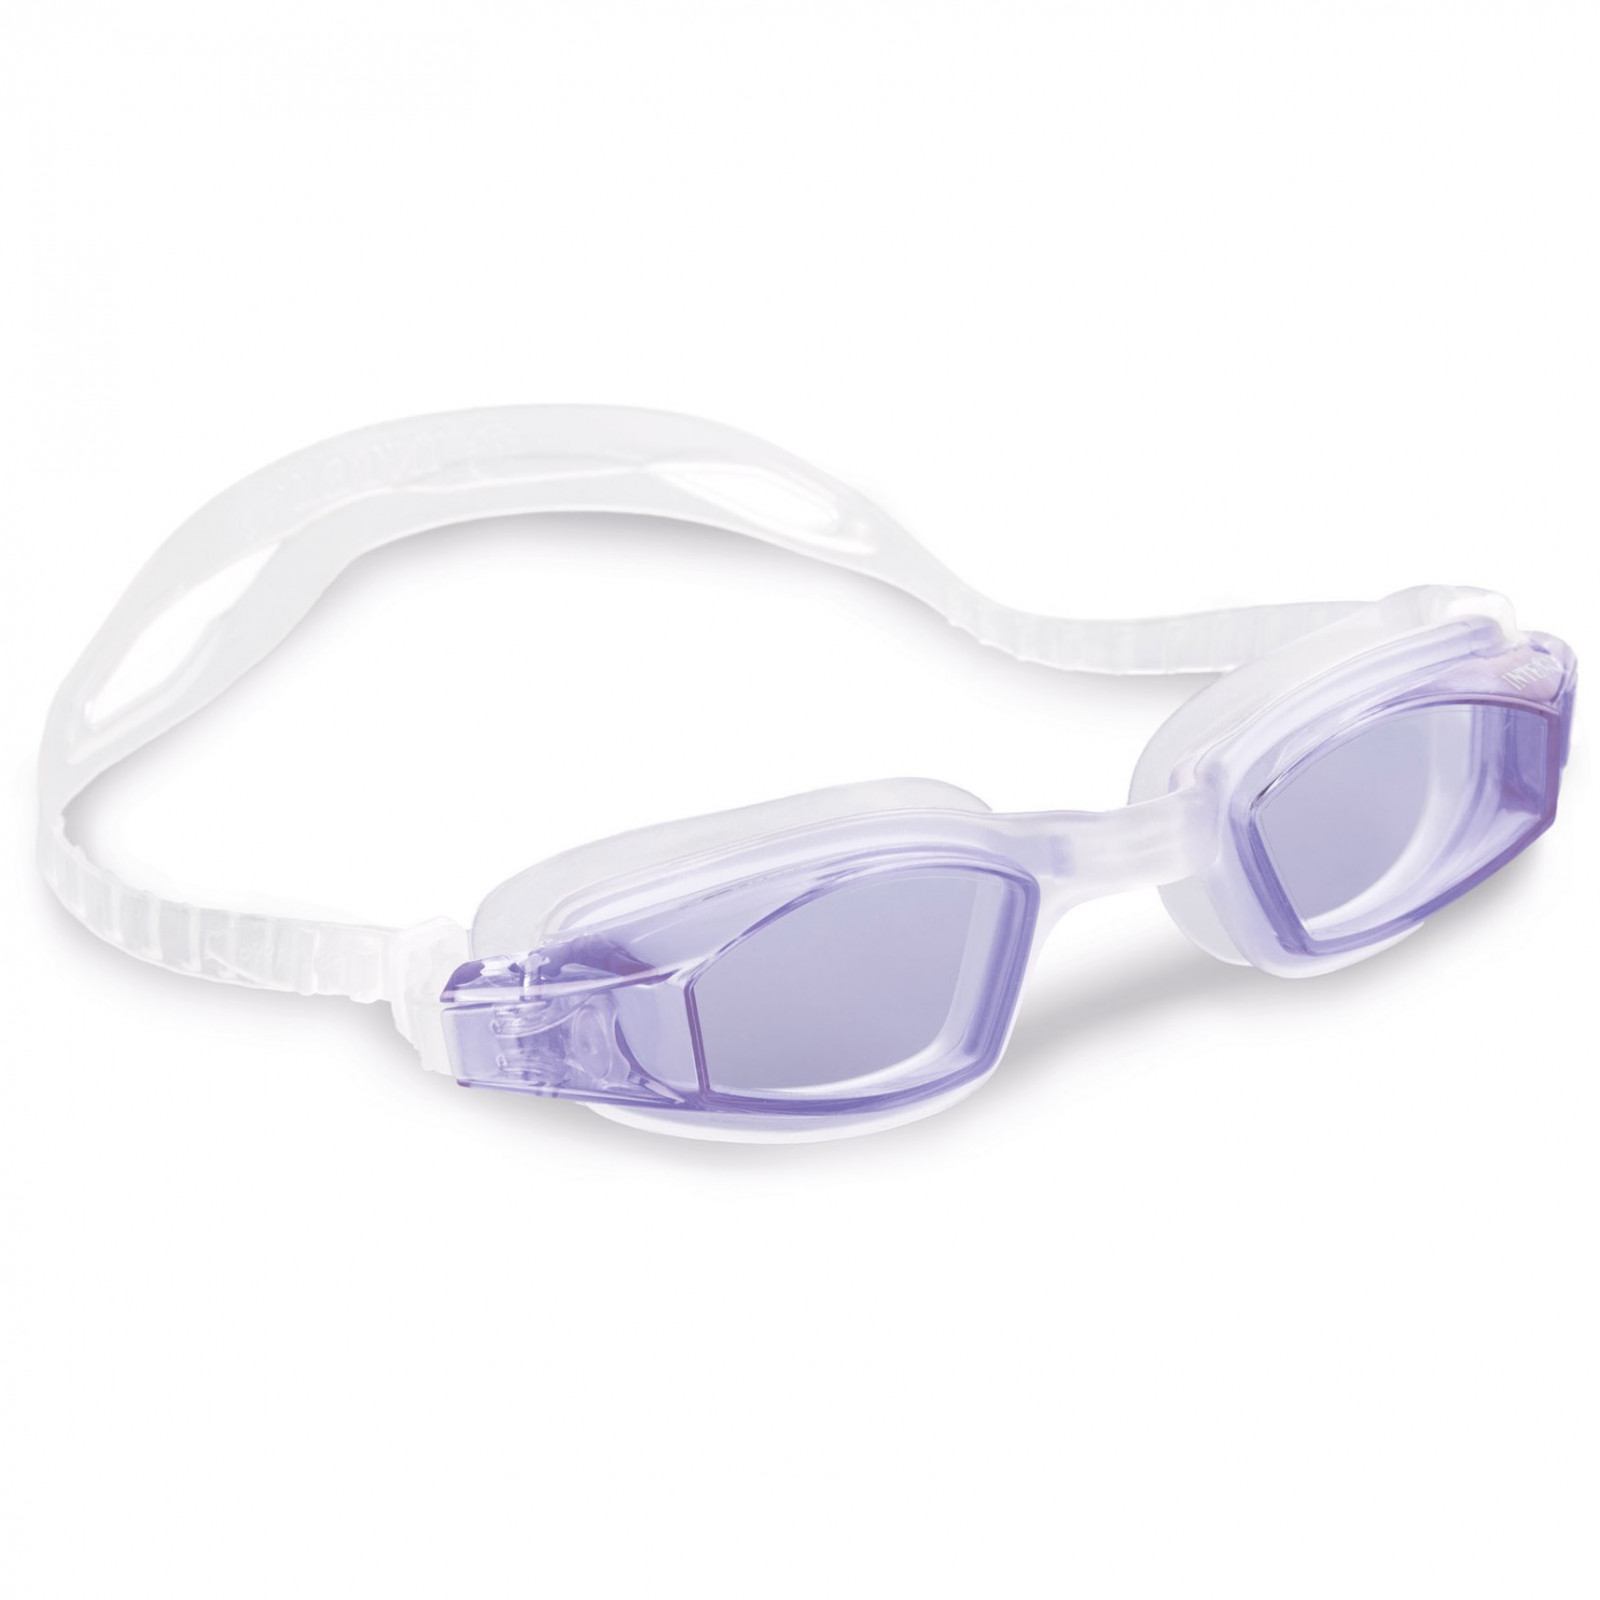 Plavecké brýle Intex Free Style Sport Goggles 55682 Barva: fialová